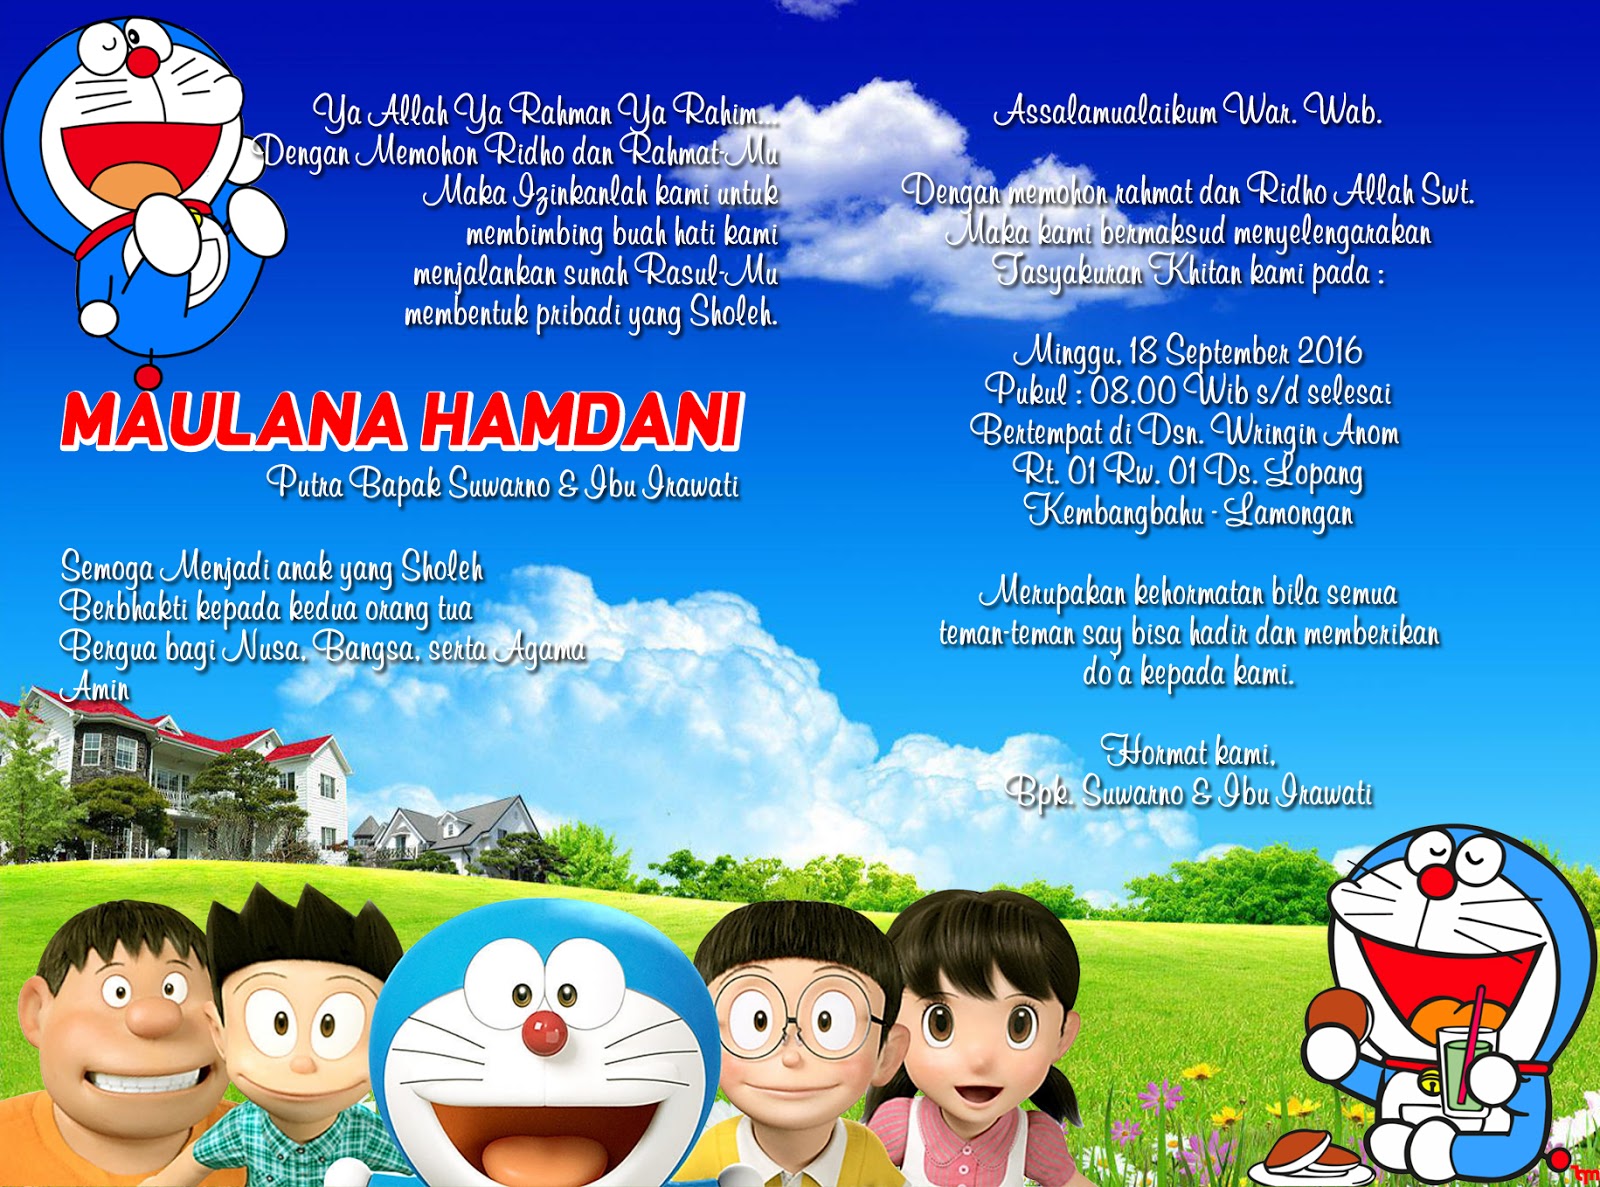 Nirwana Digital Print: Undangan Model Doraemon